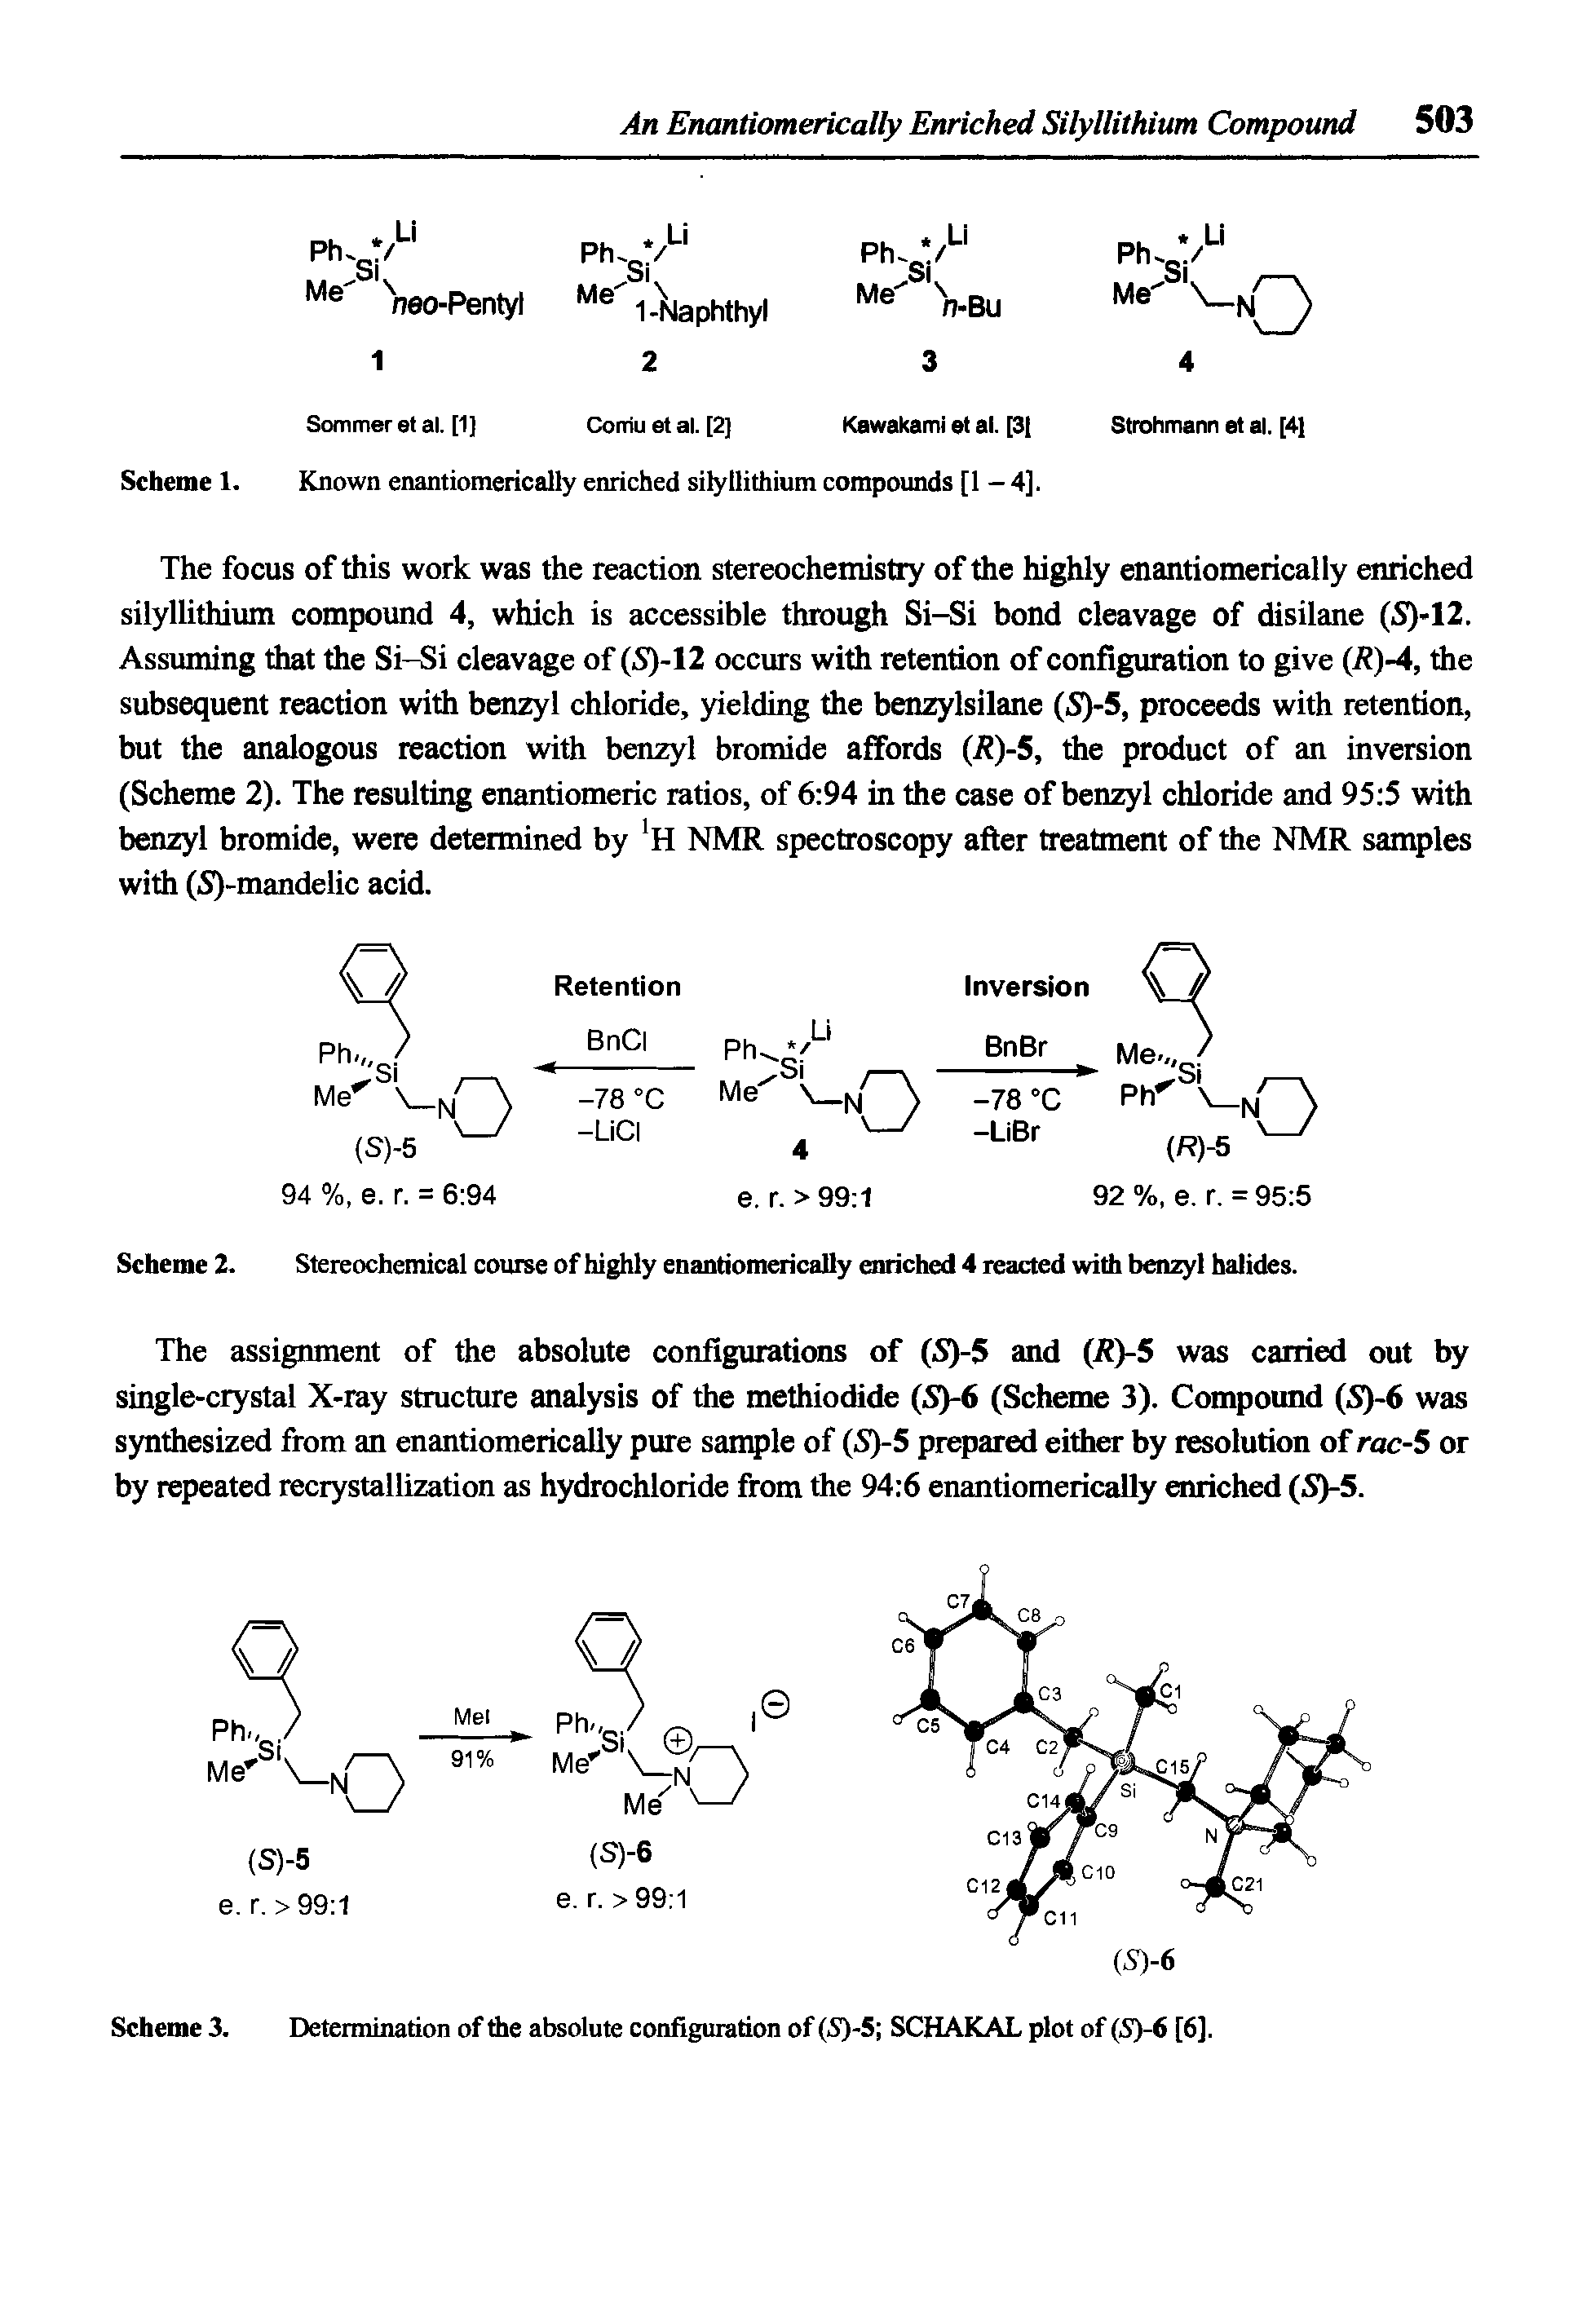 Scheme 1. Known enantiomerically enriched silyllithium compounds [1-4].